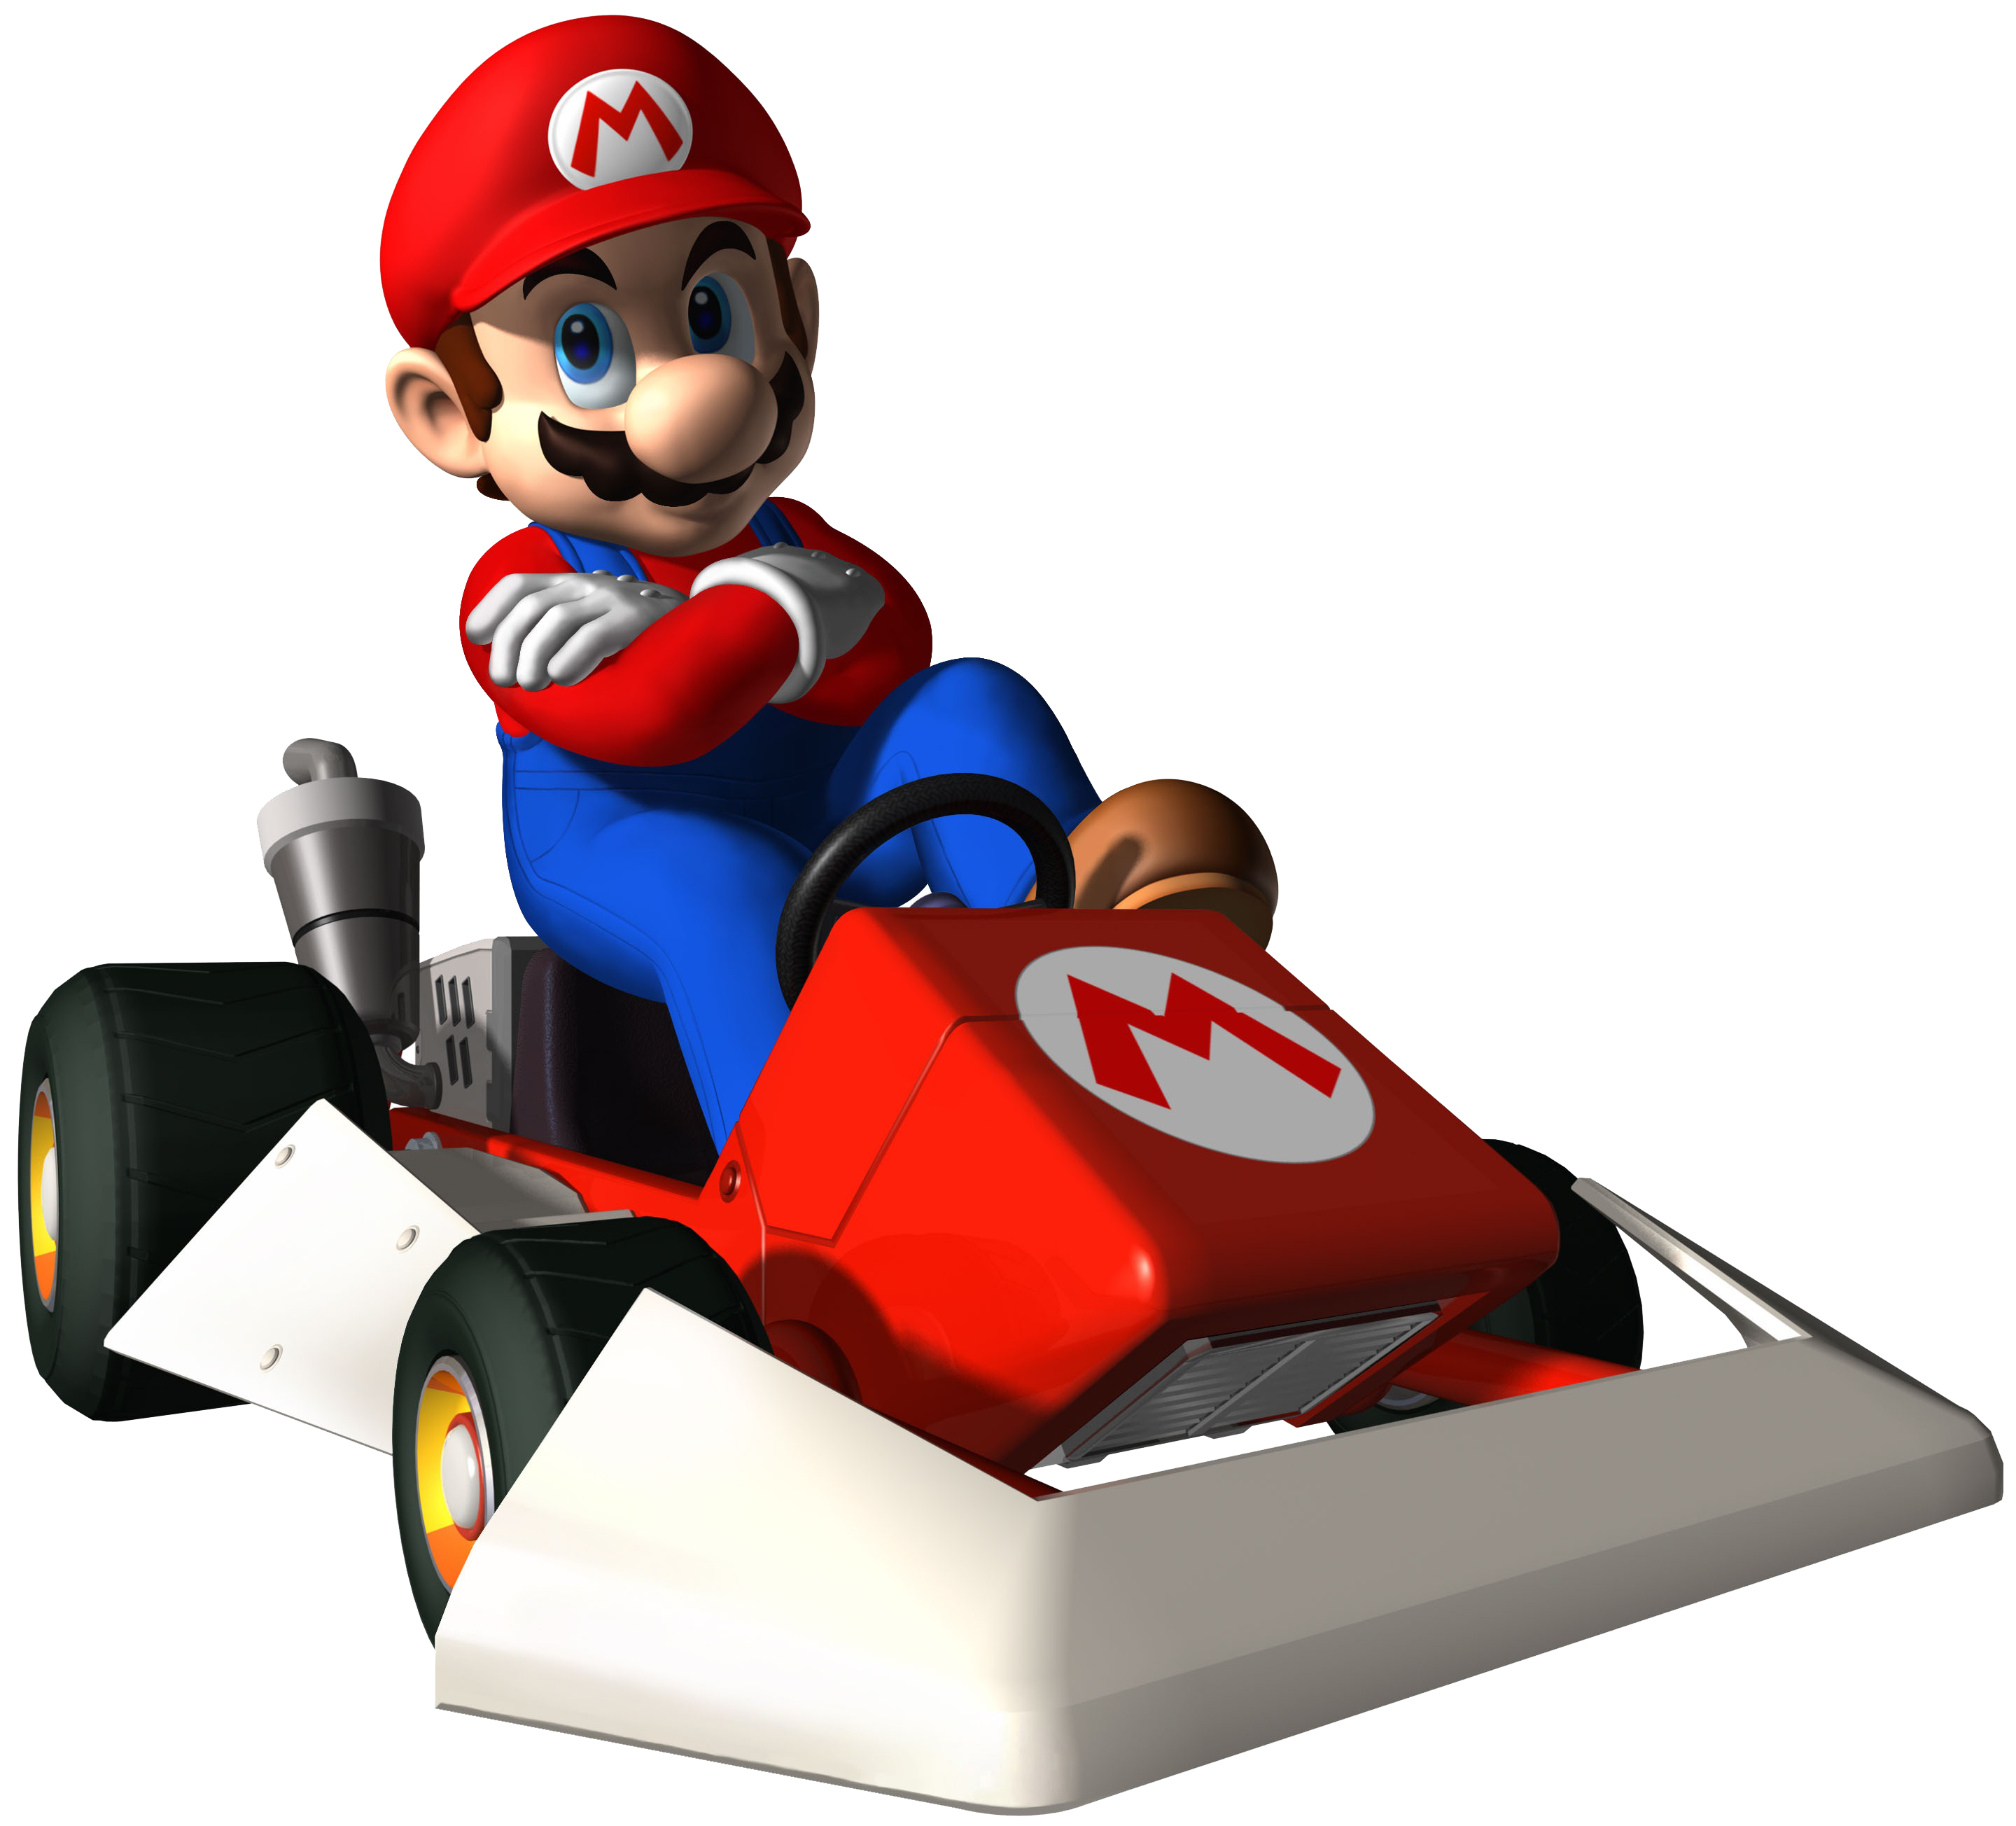 Download Super Mario Kart Clipart HQ PNG Image.